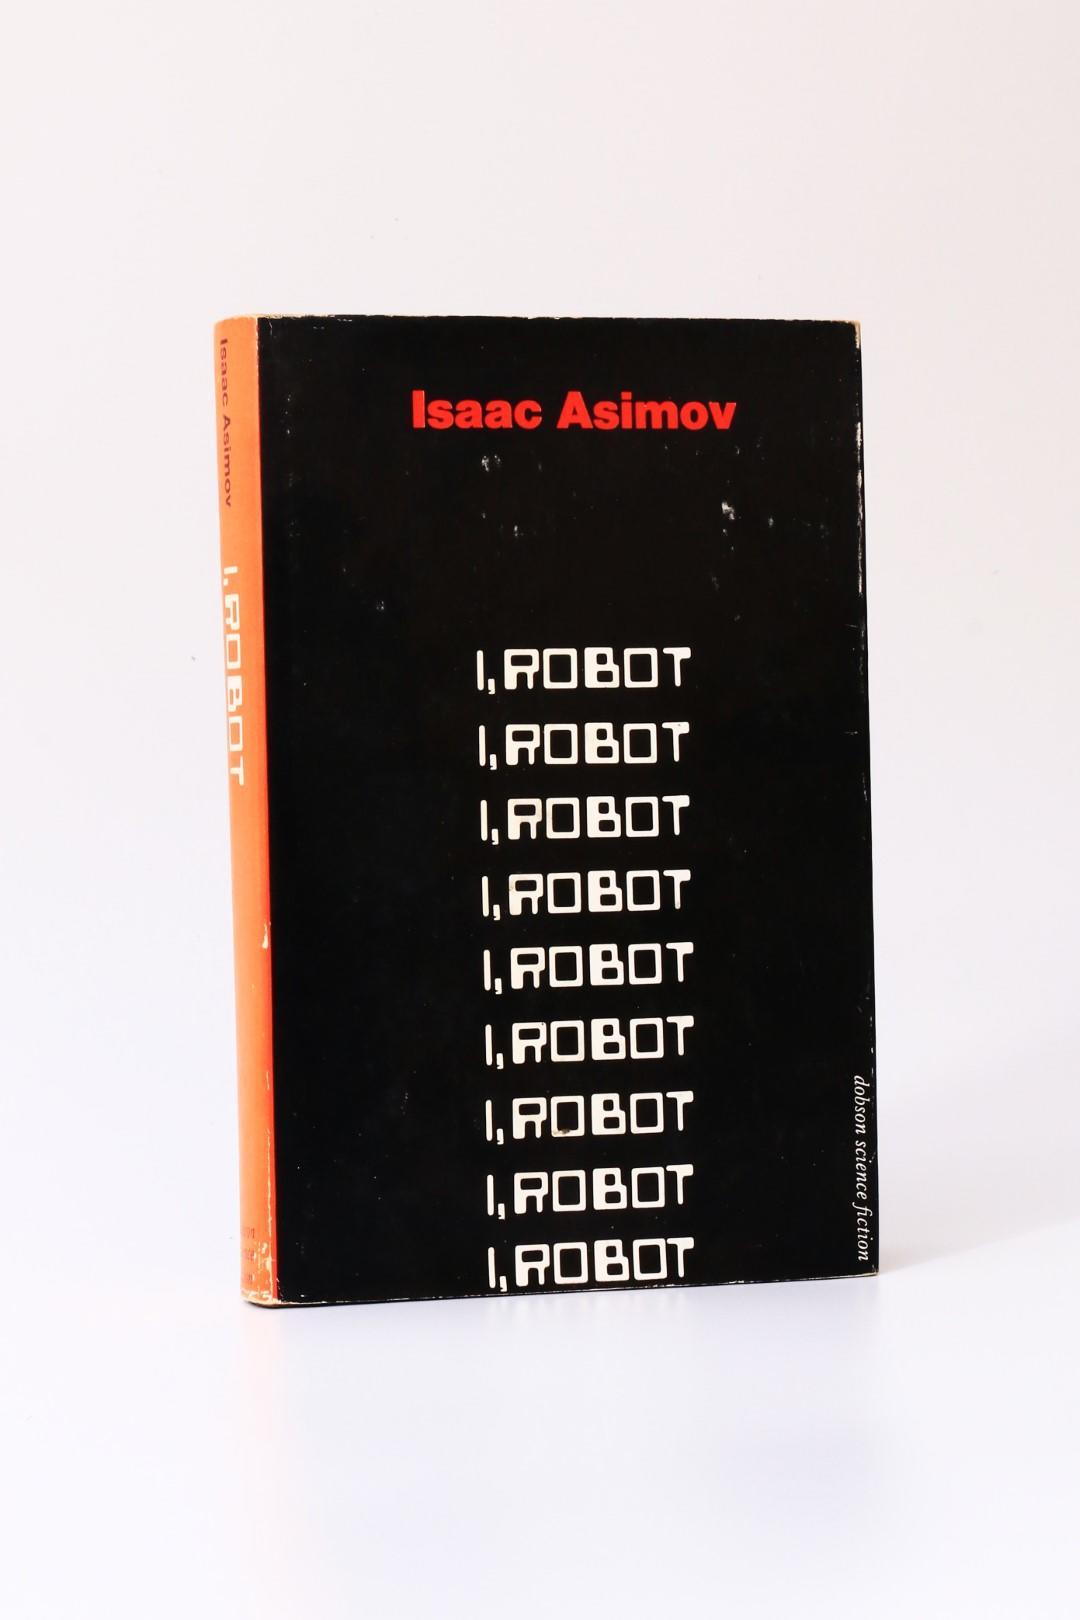 Isaac Asimov - I, Robot - Dennis Dobson, 1950 [1967], First Thus.